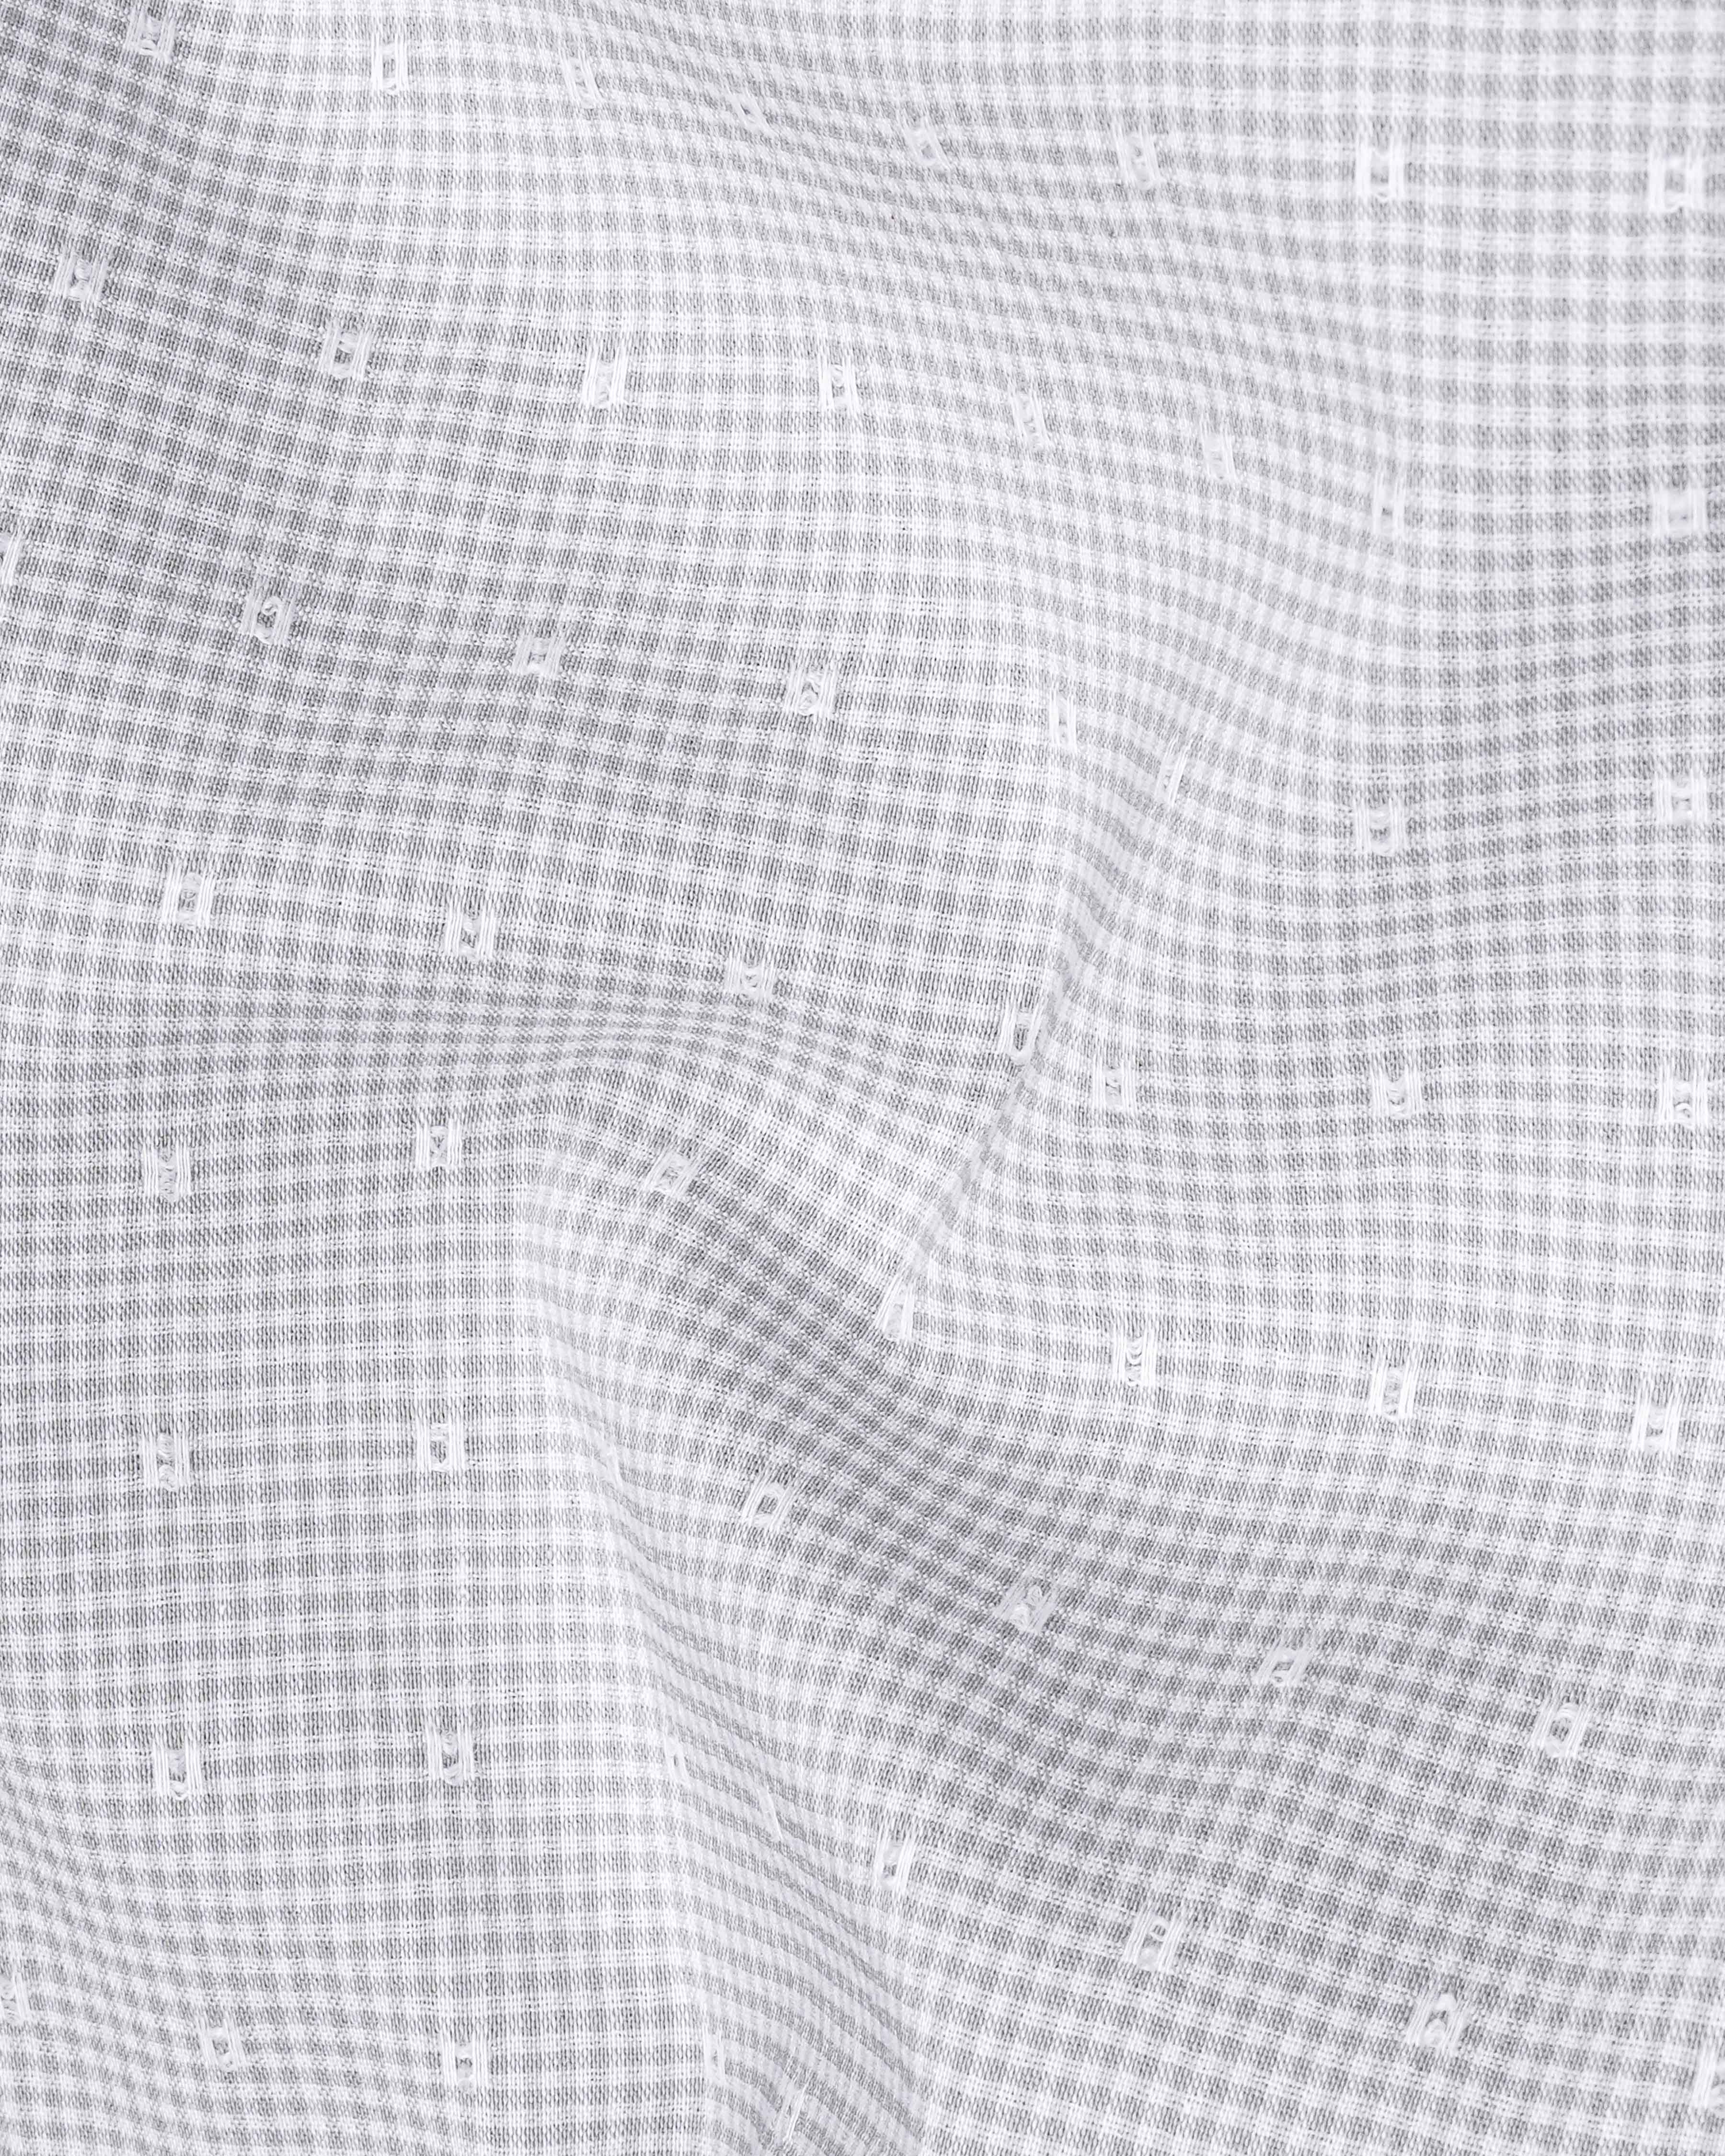 Metallic Gray and White Checks Dobby Textured Premium Giza Cotton Shirt 8243-38,8243-H-38,8243-39,8243-H-39,8243-40,8243-H-40,8243-42,8243-H-42,8243-44,8243-H-44,8243-46,8243-H-46,8243-48,8243-H-48,8243-50,8243-H-50,8243-52,8243-H-52